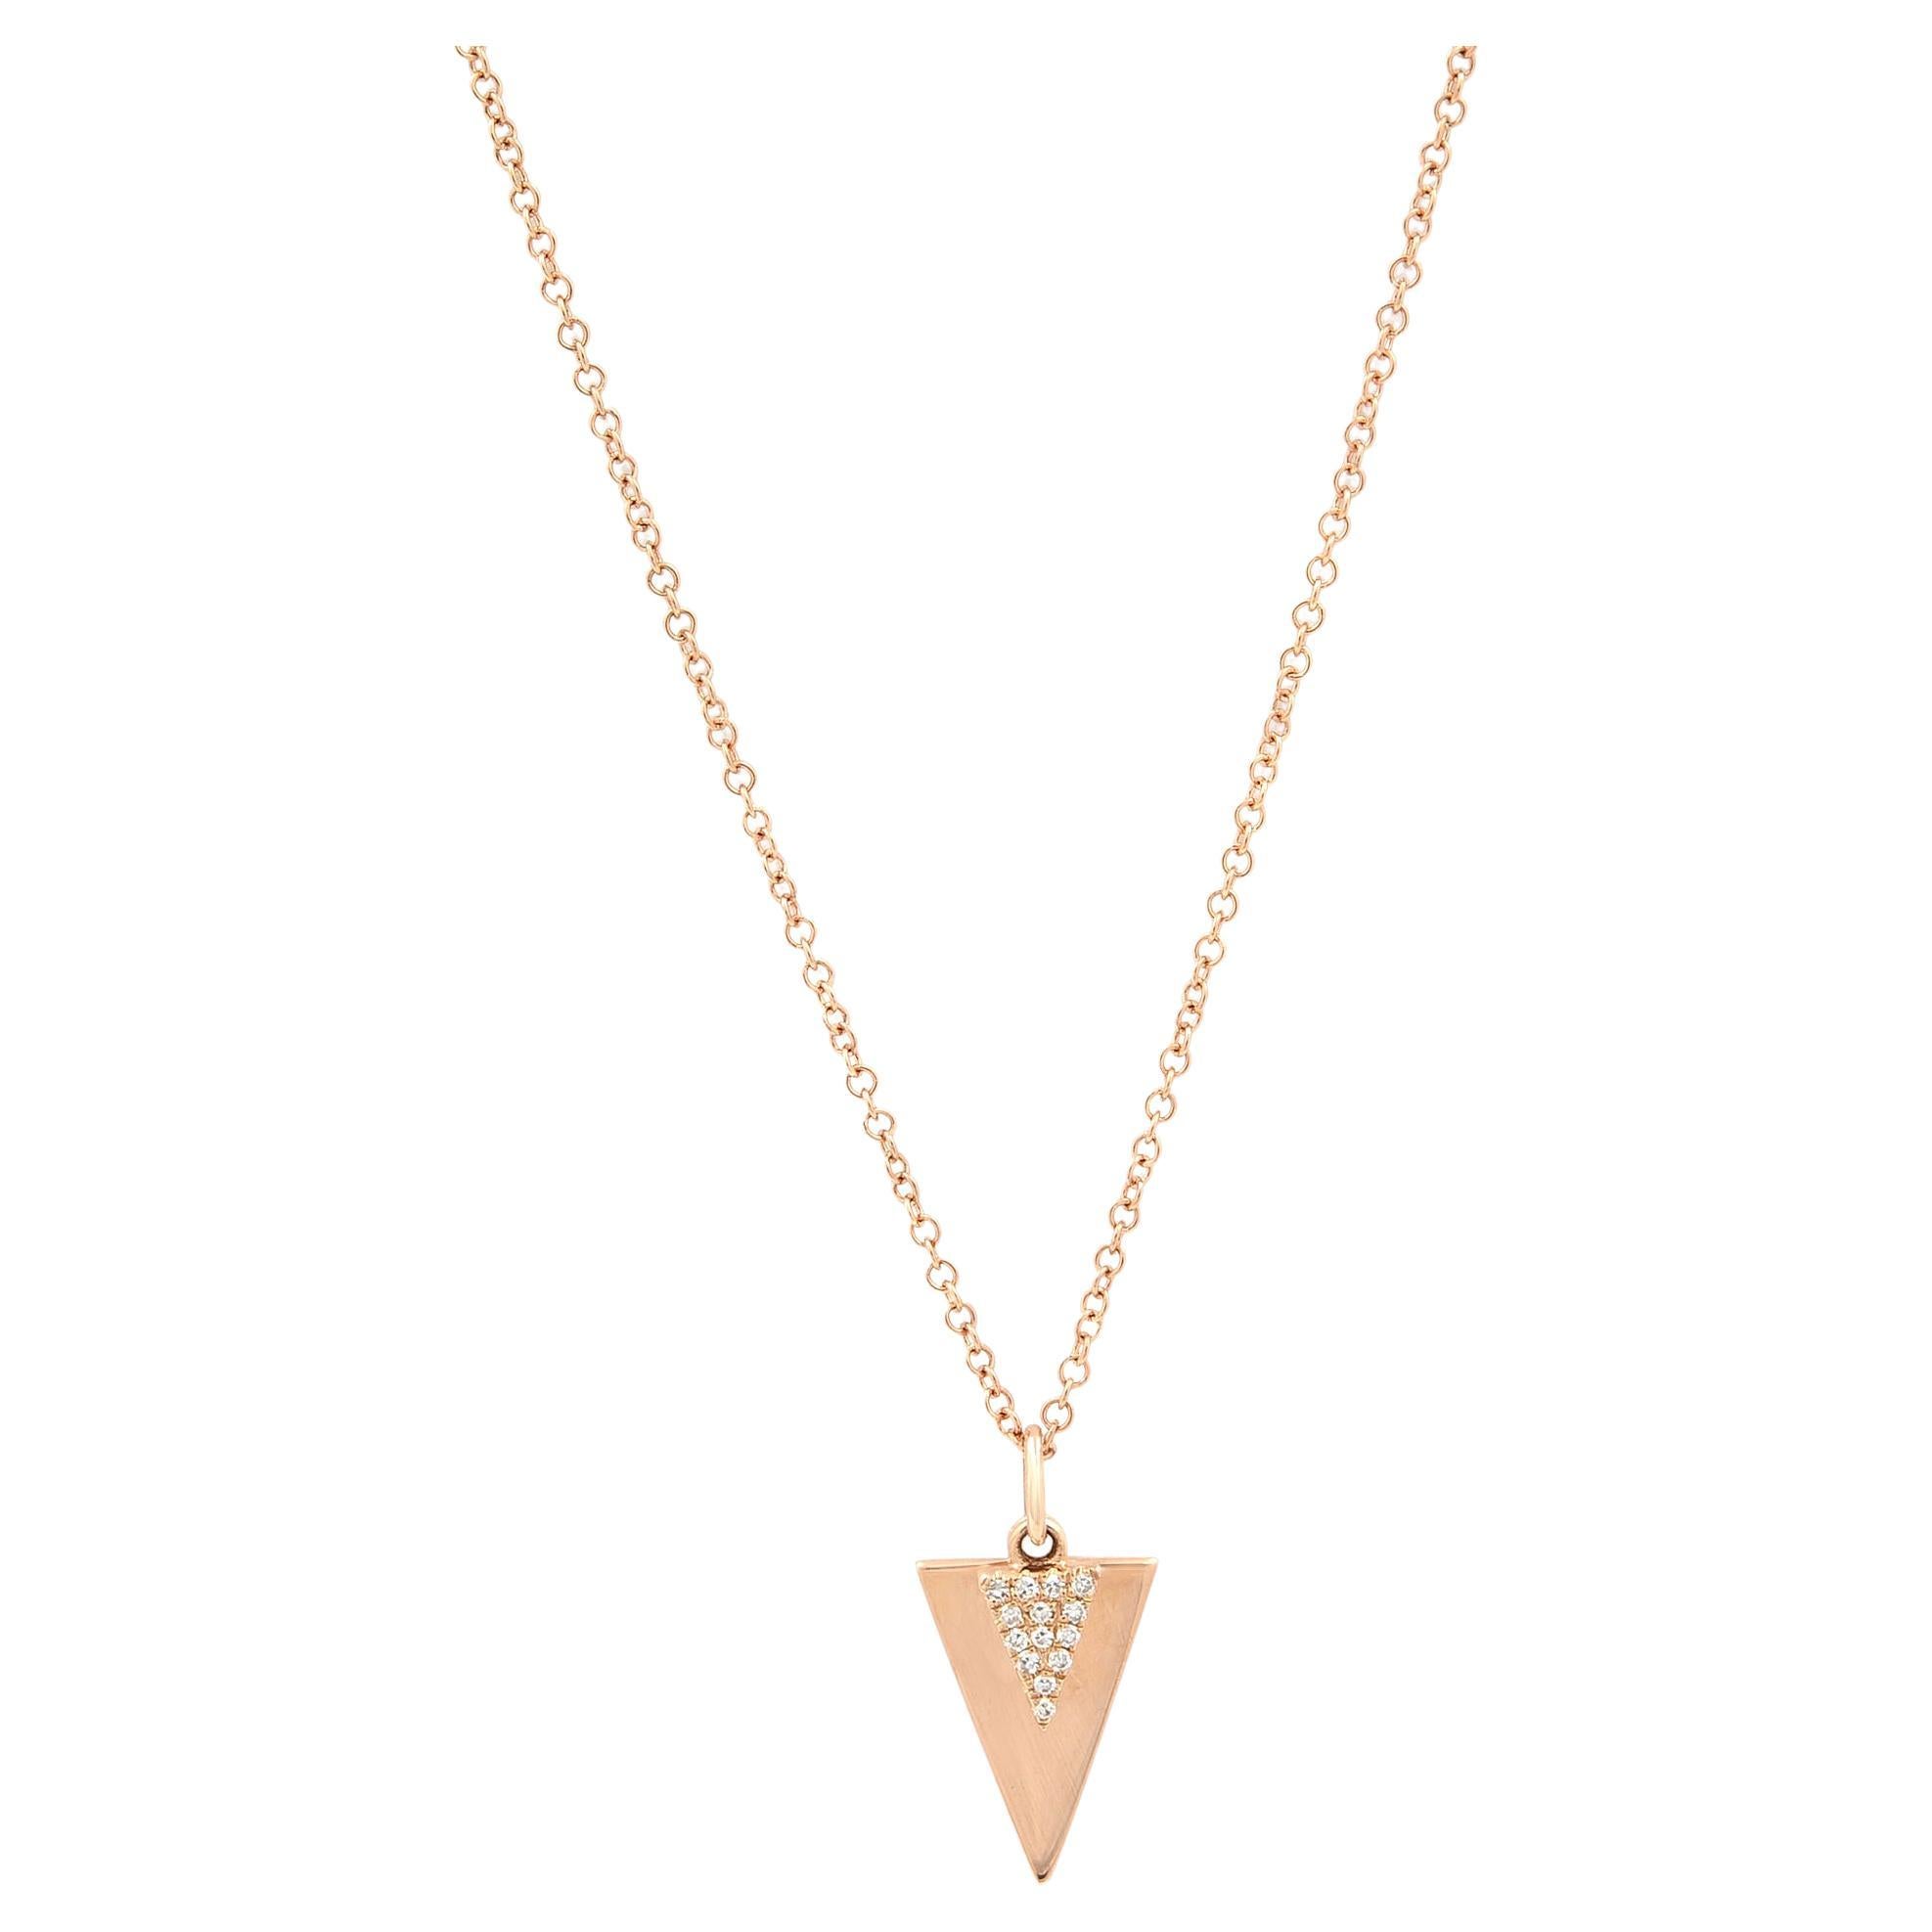 Rachel Koen Diamond Triangle Necklace 14K Rose Gold 0.03Cttw For Sale